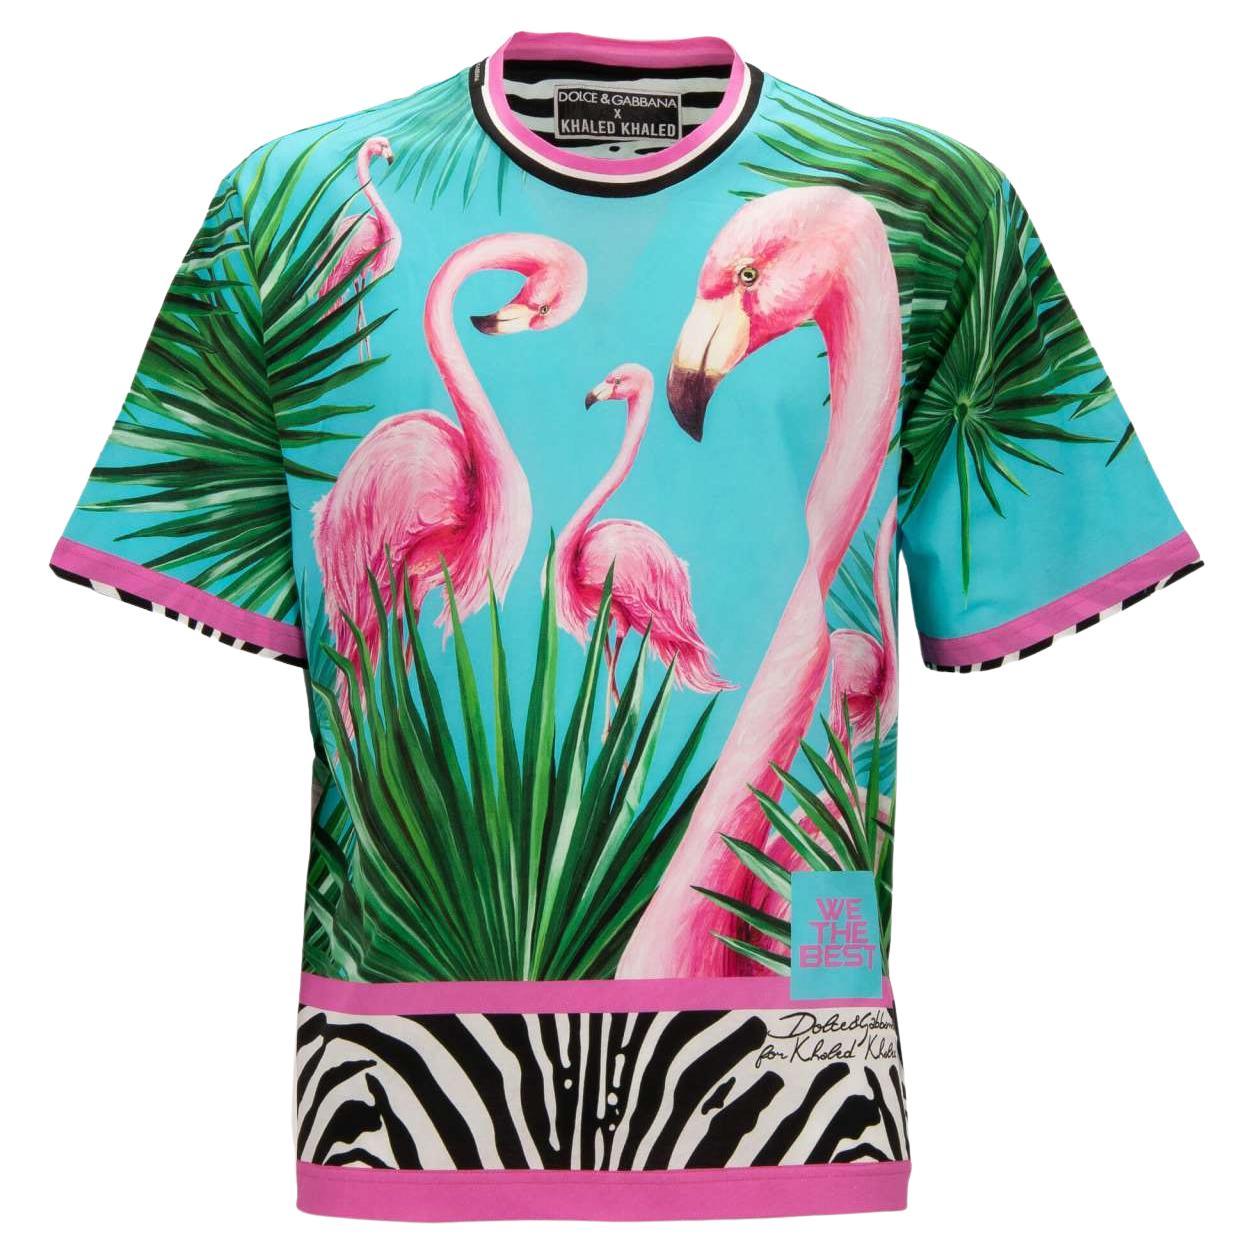 D&G - DJ Khaled Oversize T-Shirt with Flamingo Zebra Print Pink Blue 58 For Sale